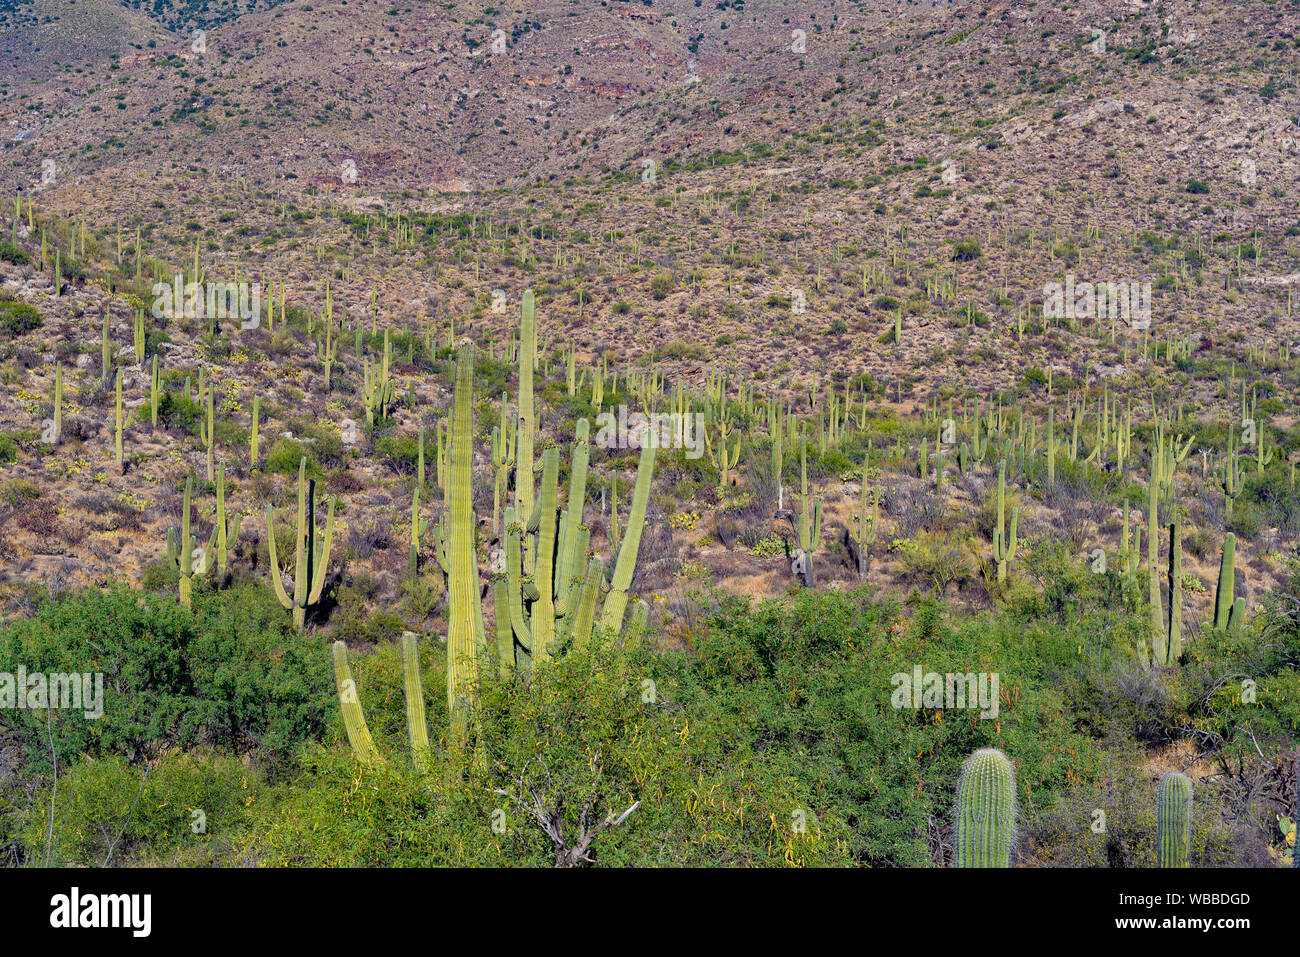 Cactus garden in the east district of Saguaro National Park, Arizona Stock Photo